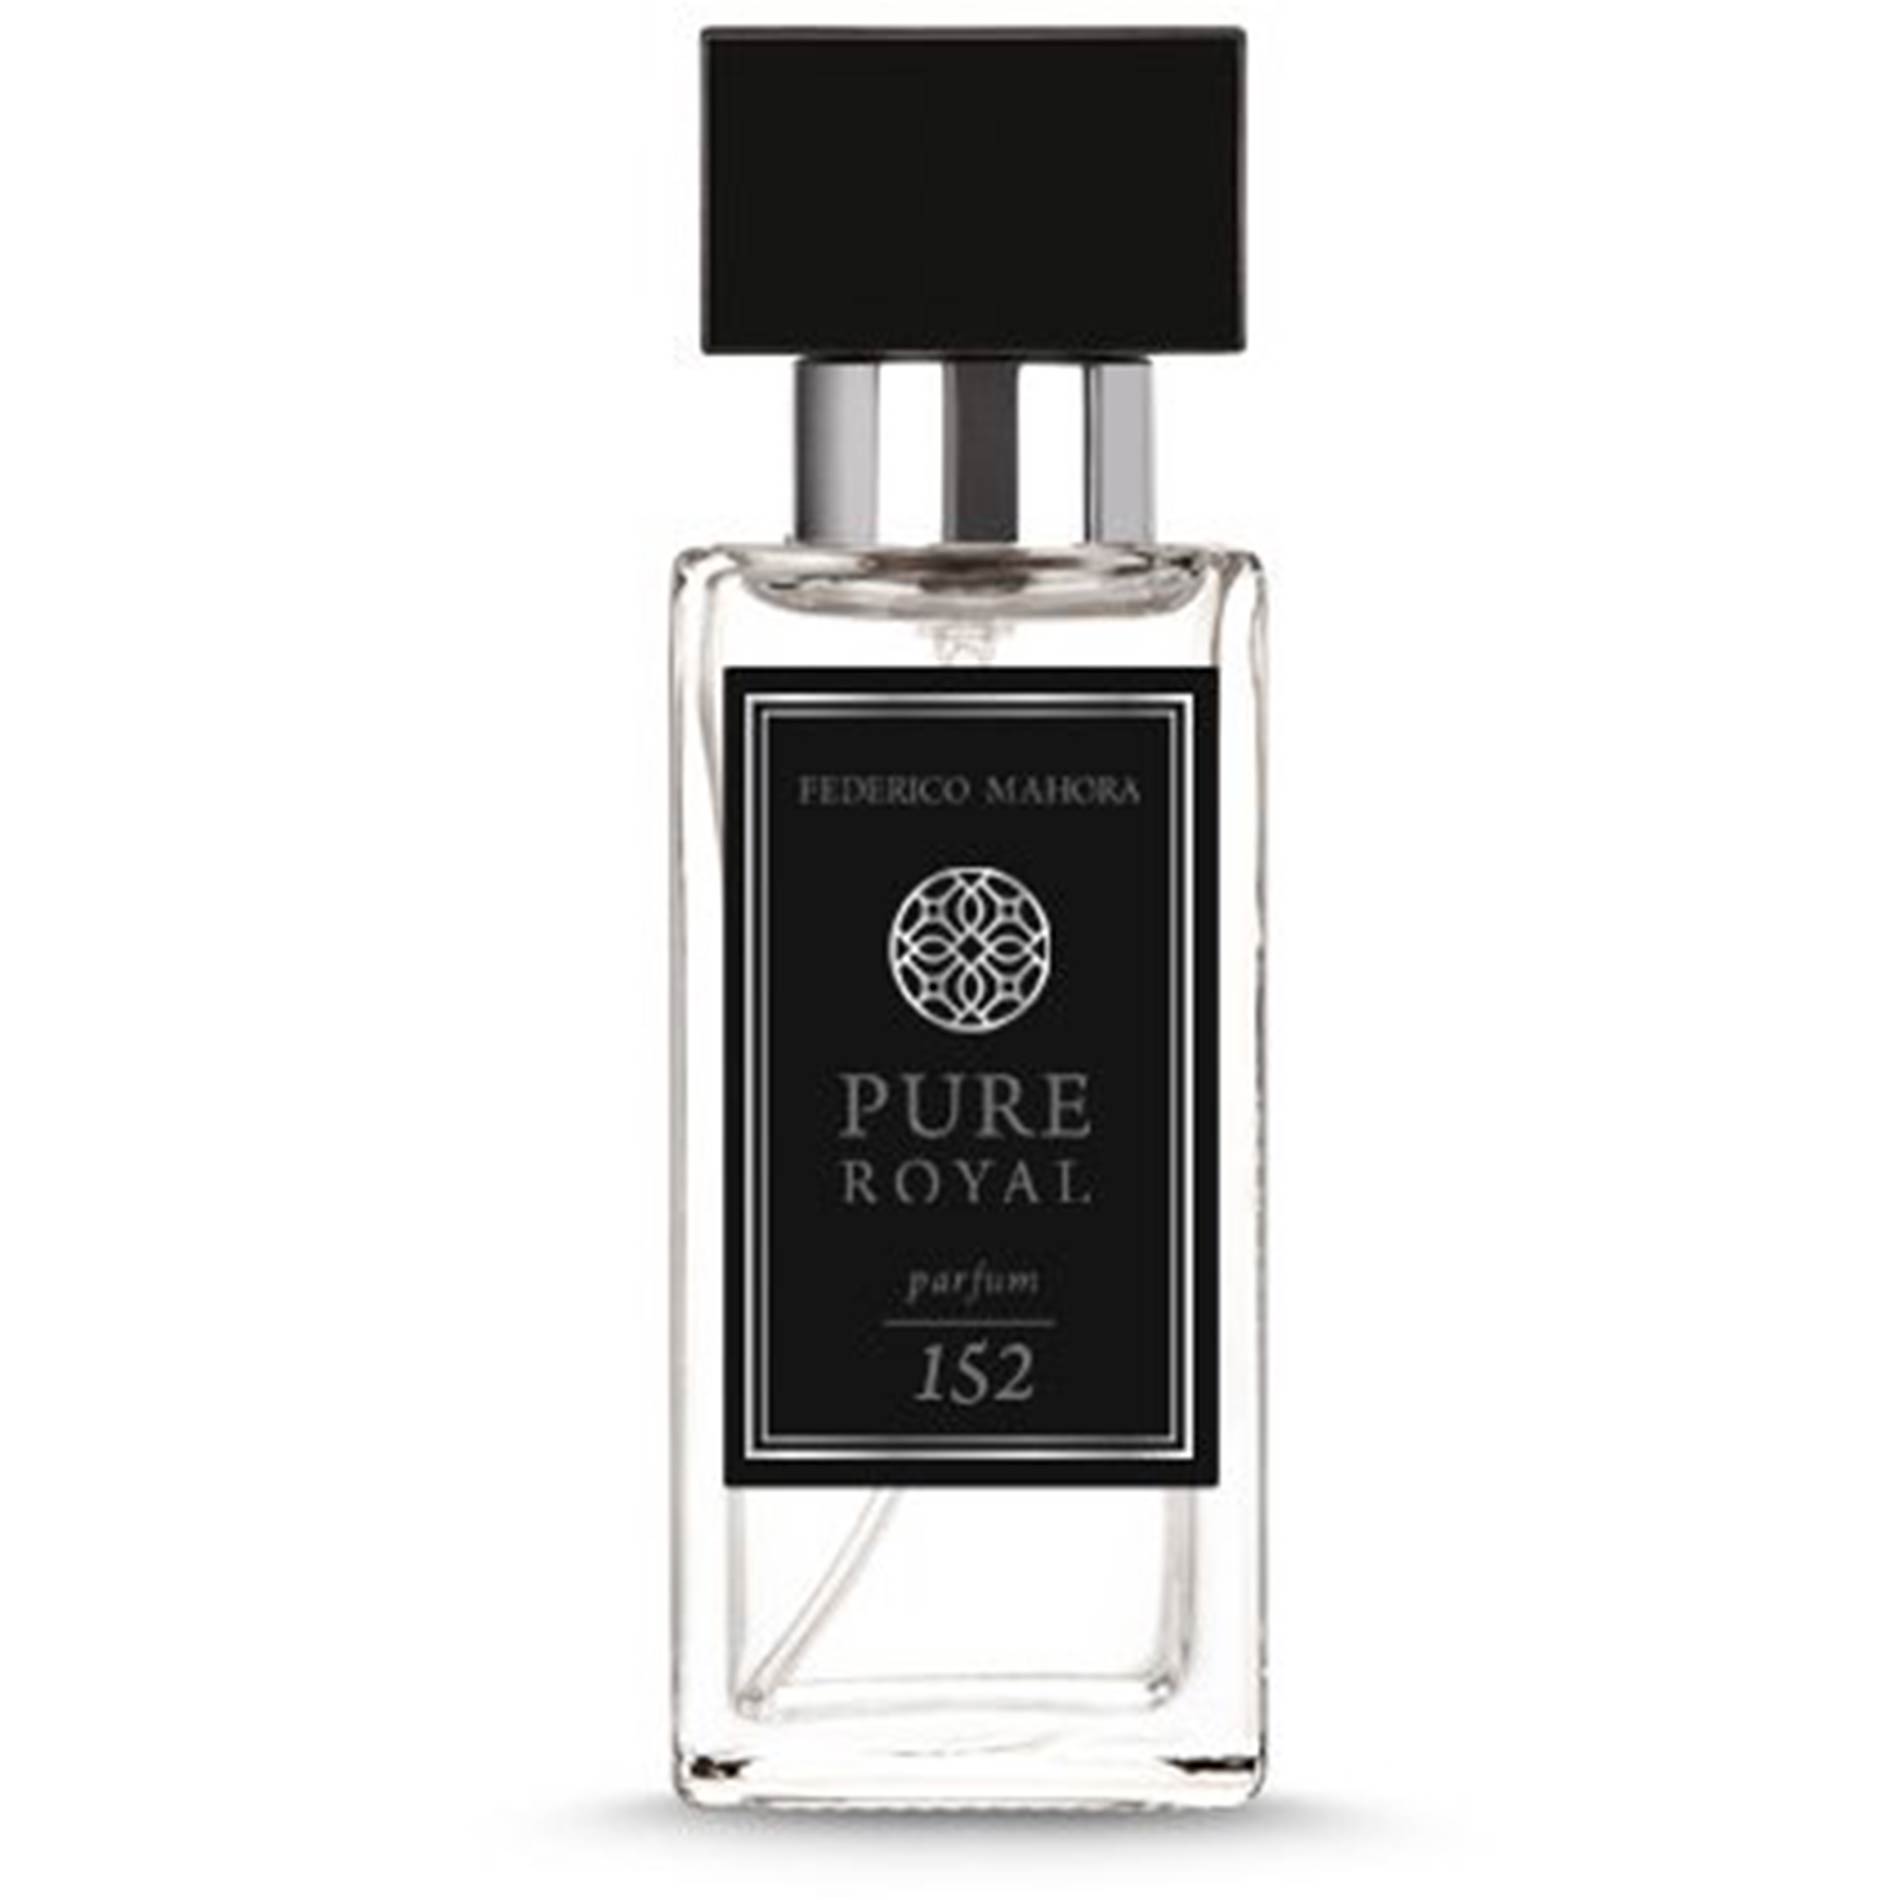 pure royal 152 parfum by federico mahora